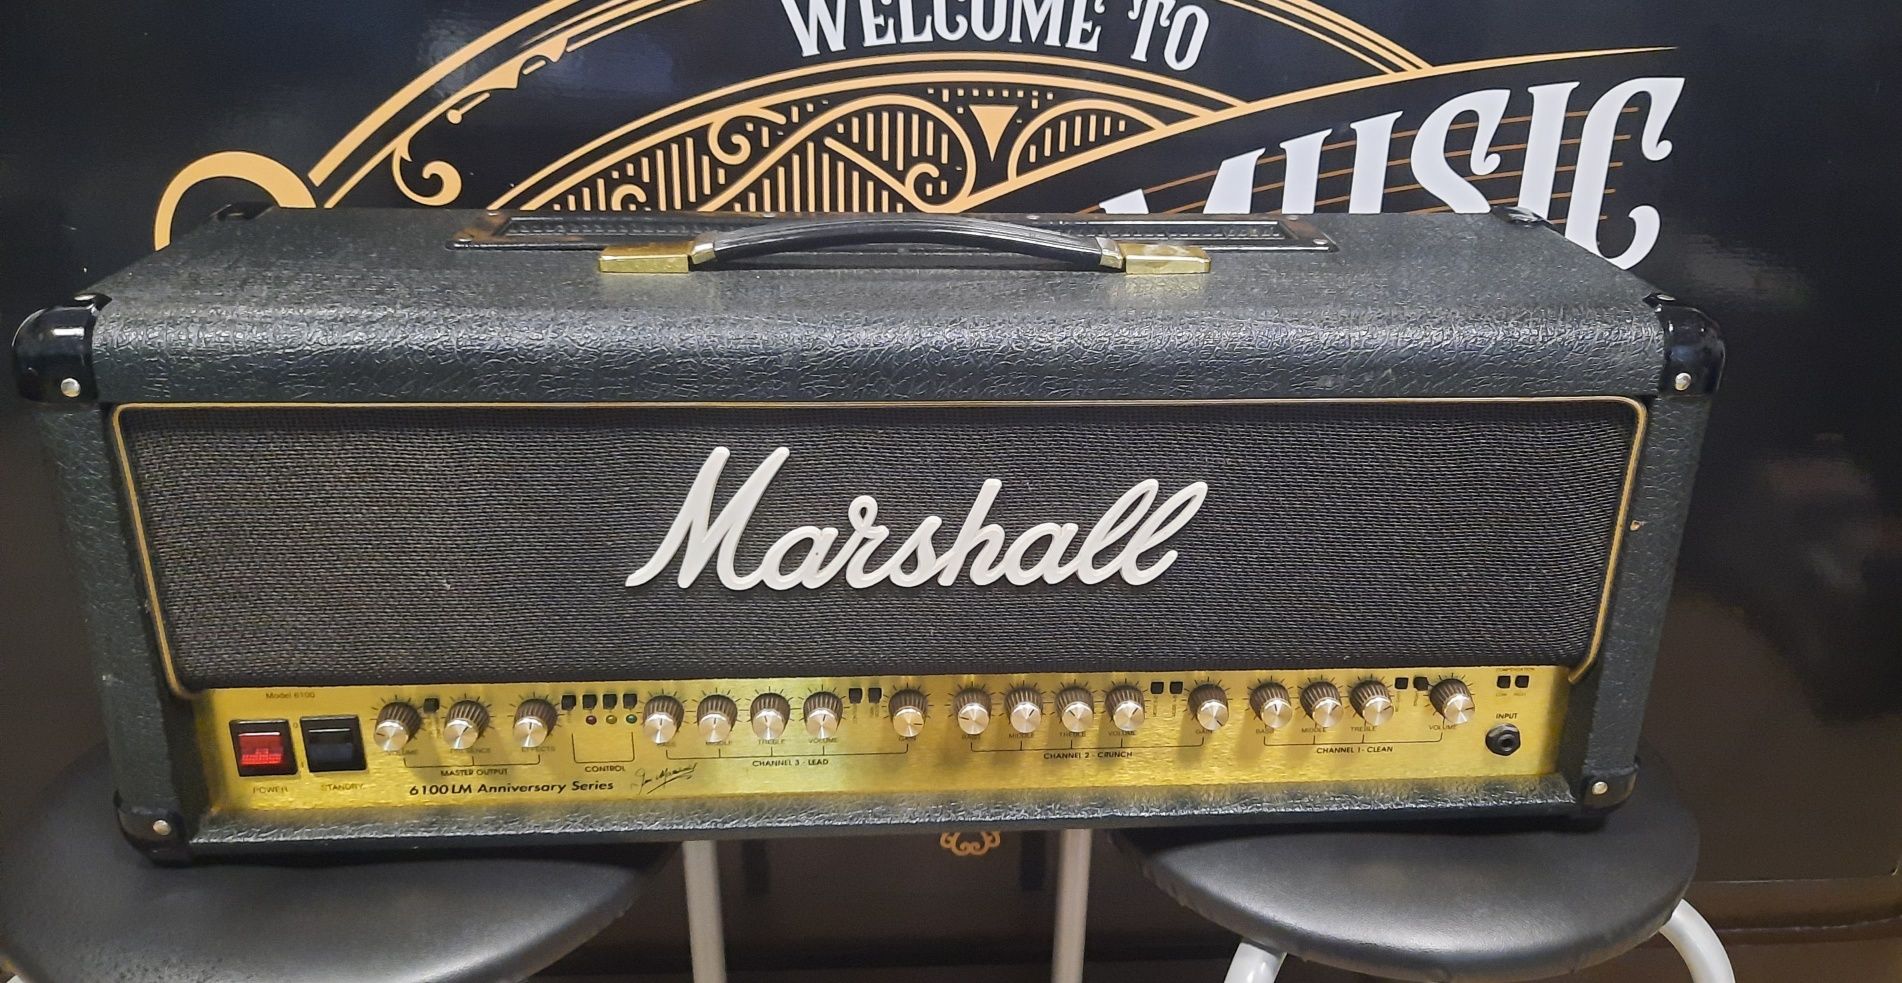 Marshall 6100LM Anniversary Series.